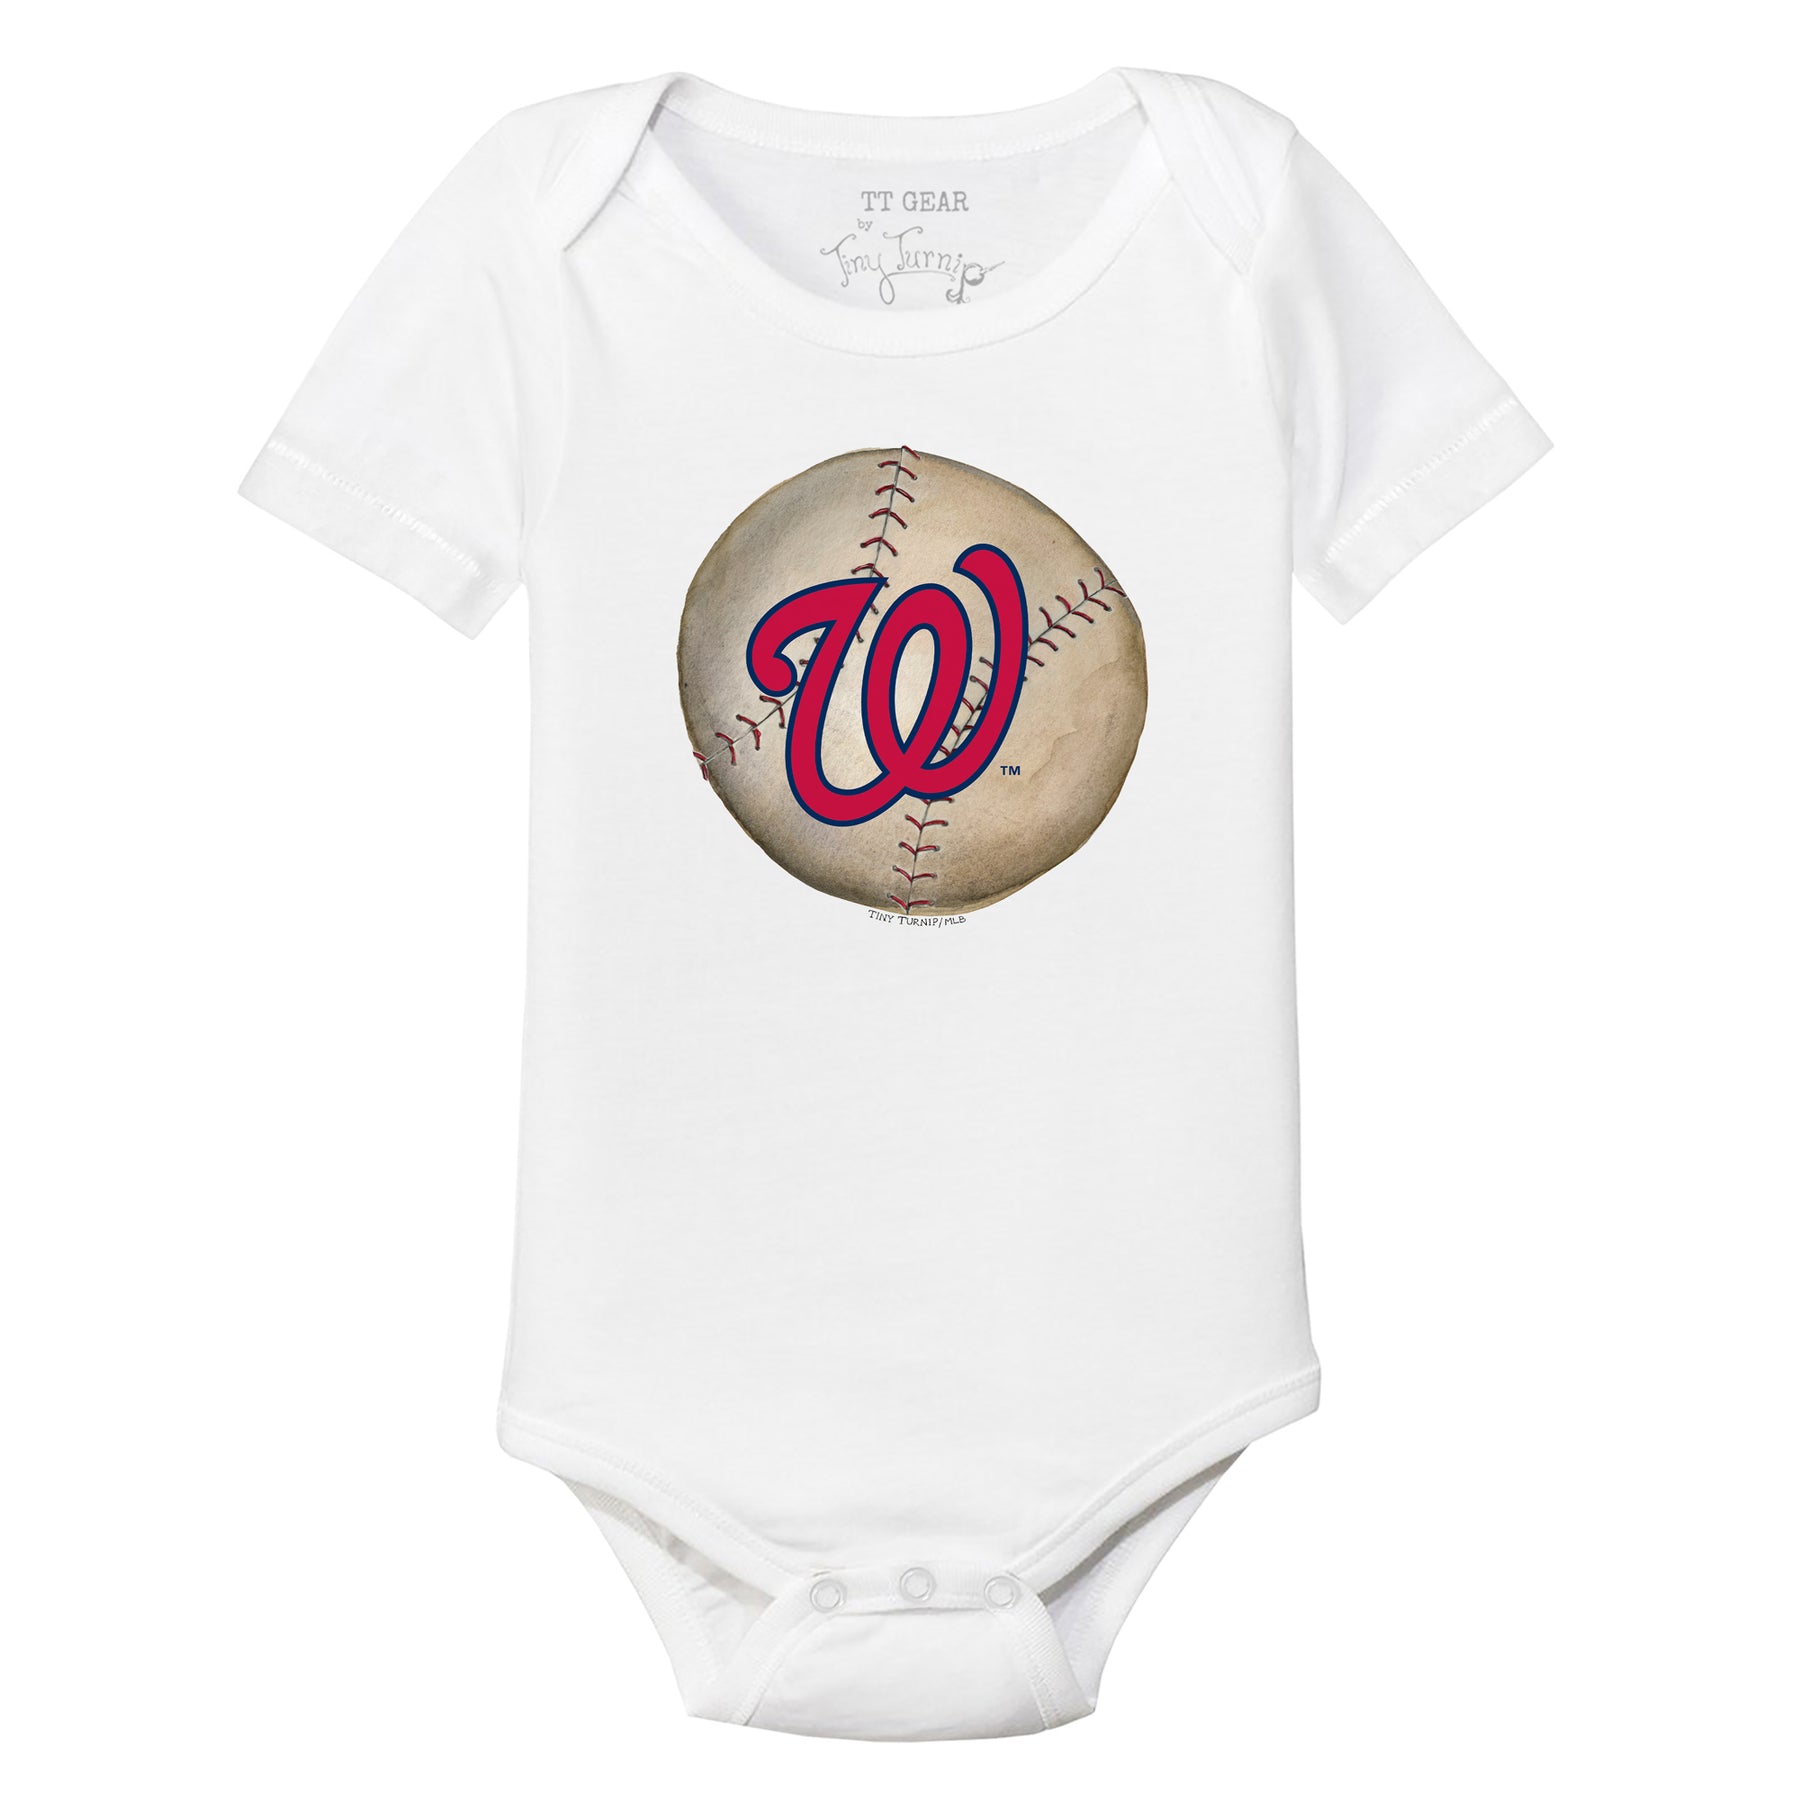 Washington Nationals Baby Apparel, Nationals Infant Jerseys, Toddler Apparel